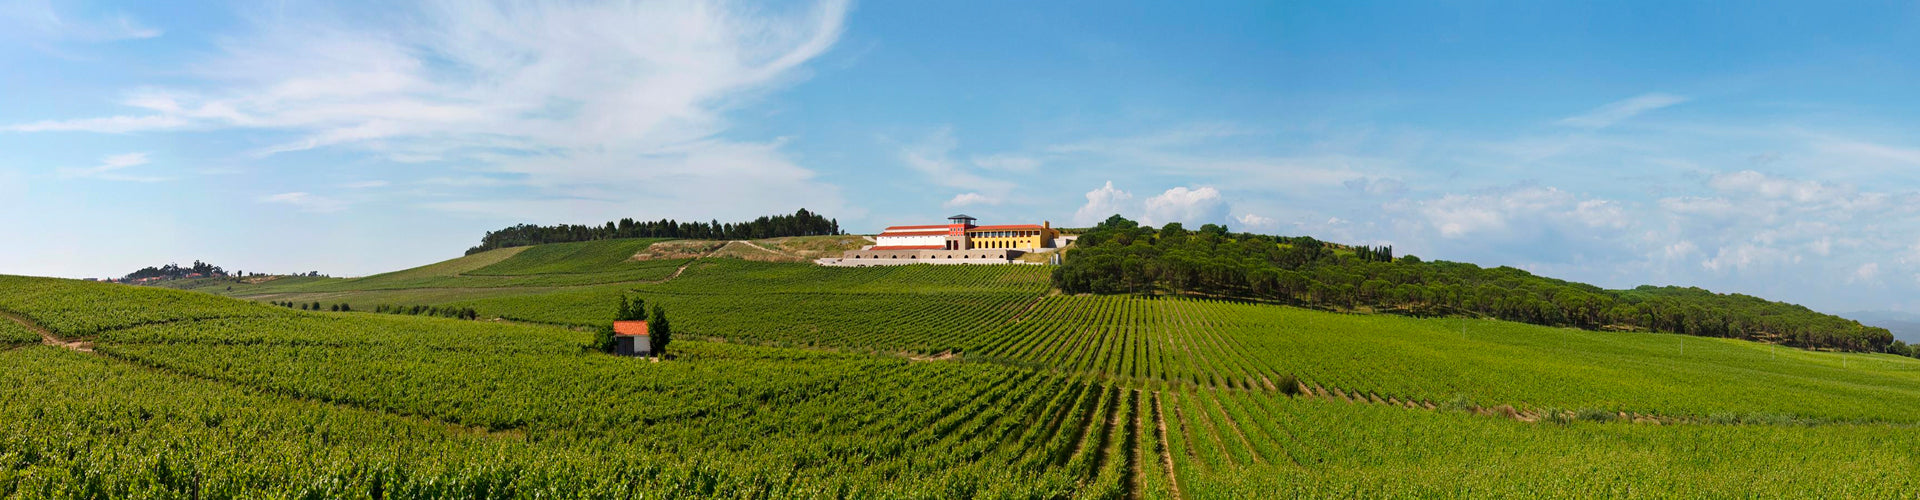 Campolargo Vinhos Vineyards in Bairrada, Portugal